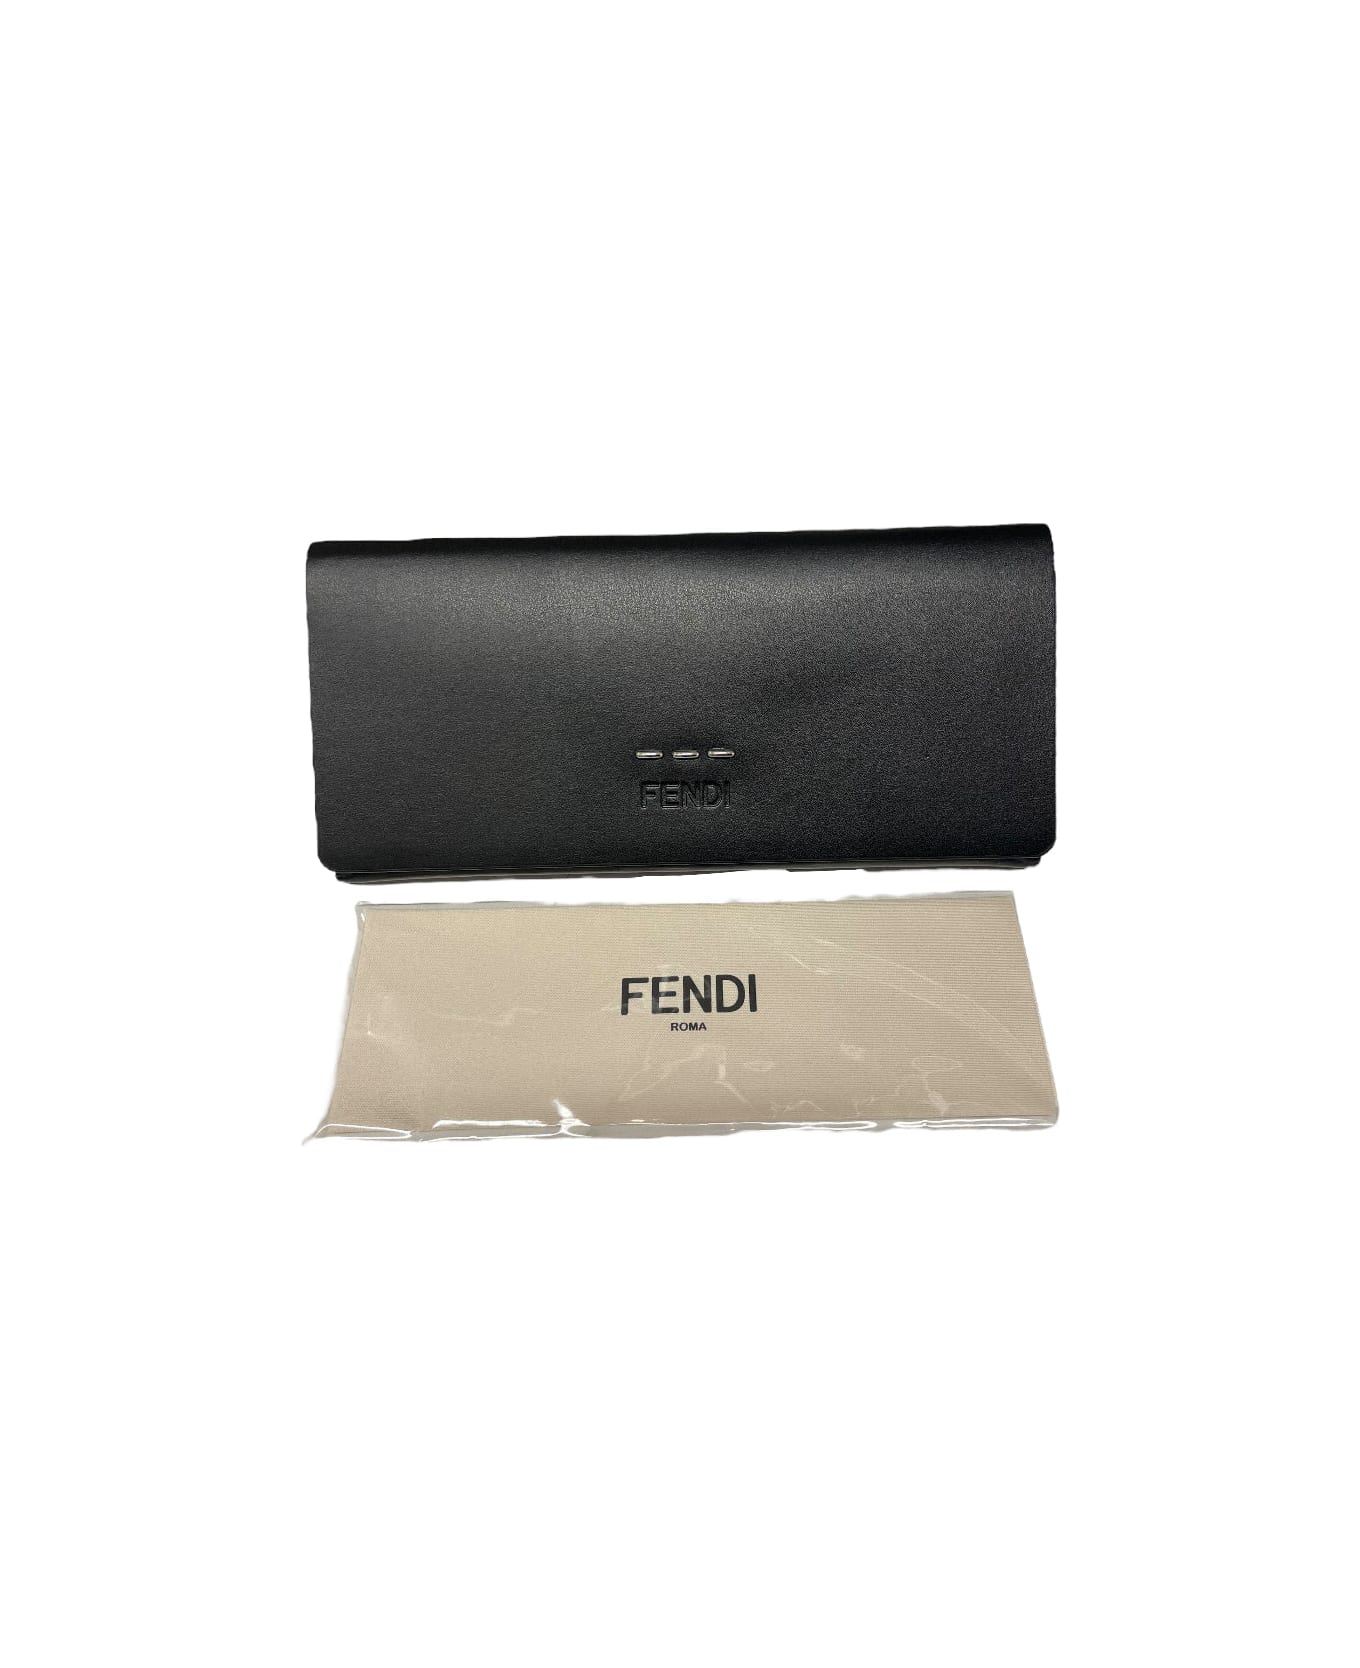 Fendi Eyewear Ff 0400 - Gold Sunglasses サングラス